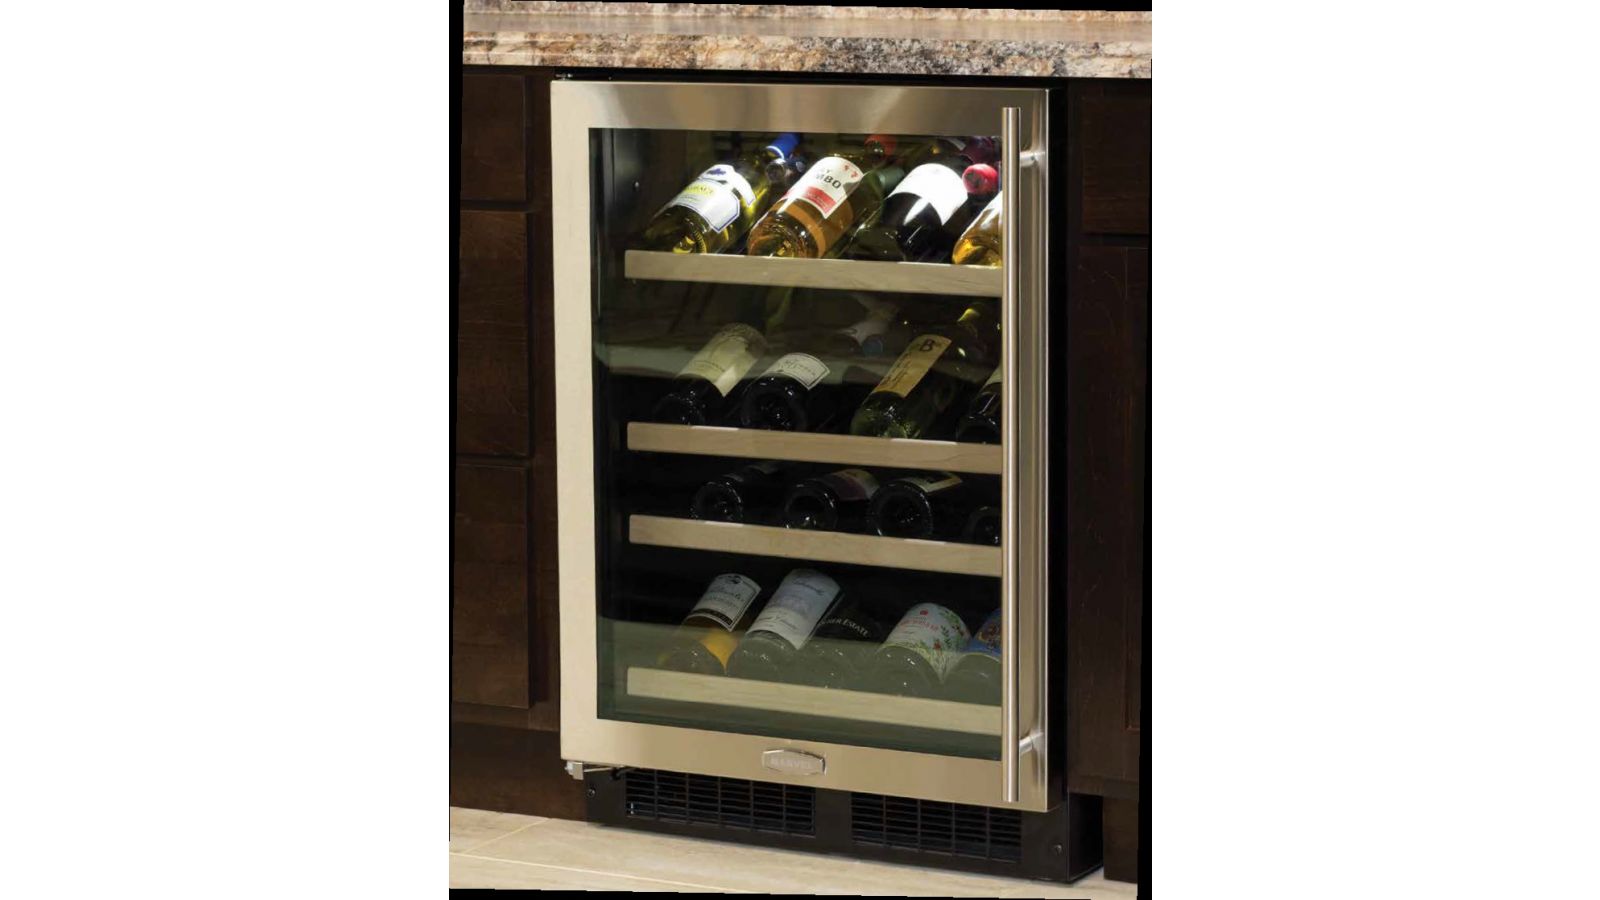 24 Marvel High-Efficiency Gallery Wine Cellar